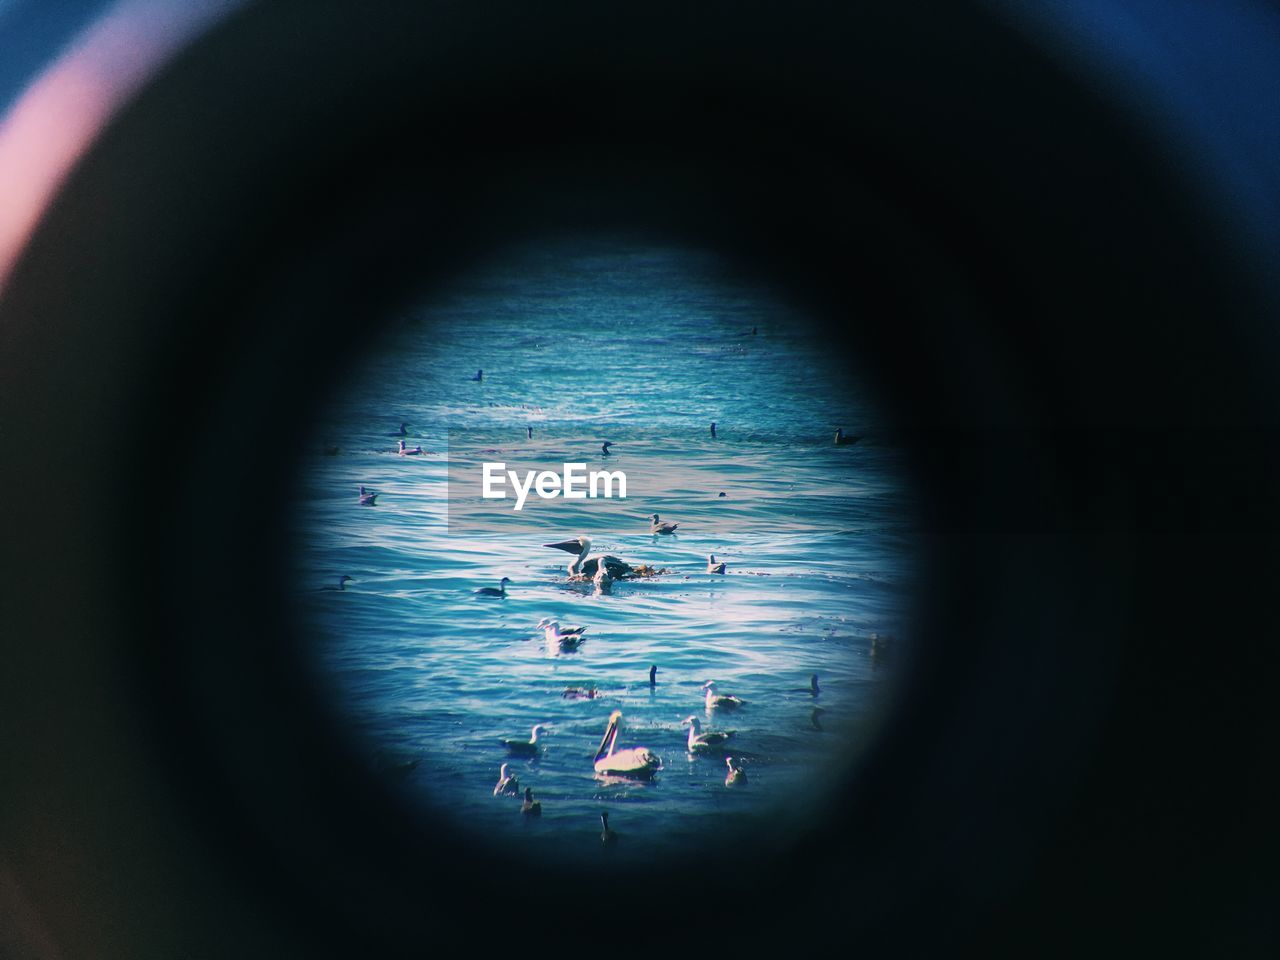 Flock of birds swimming in sea seen through binocular